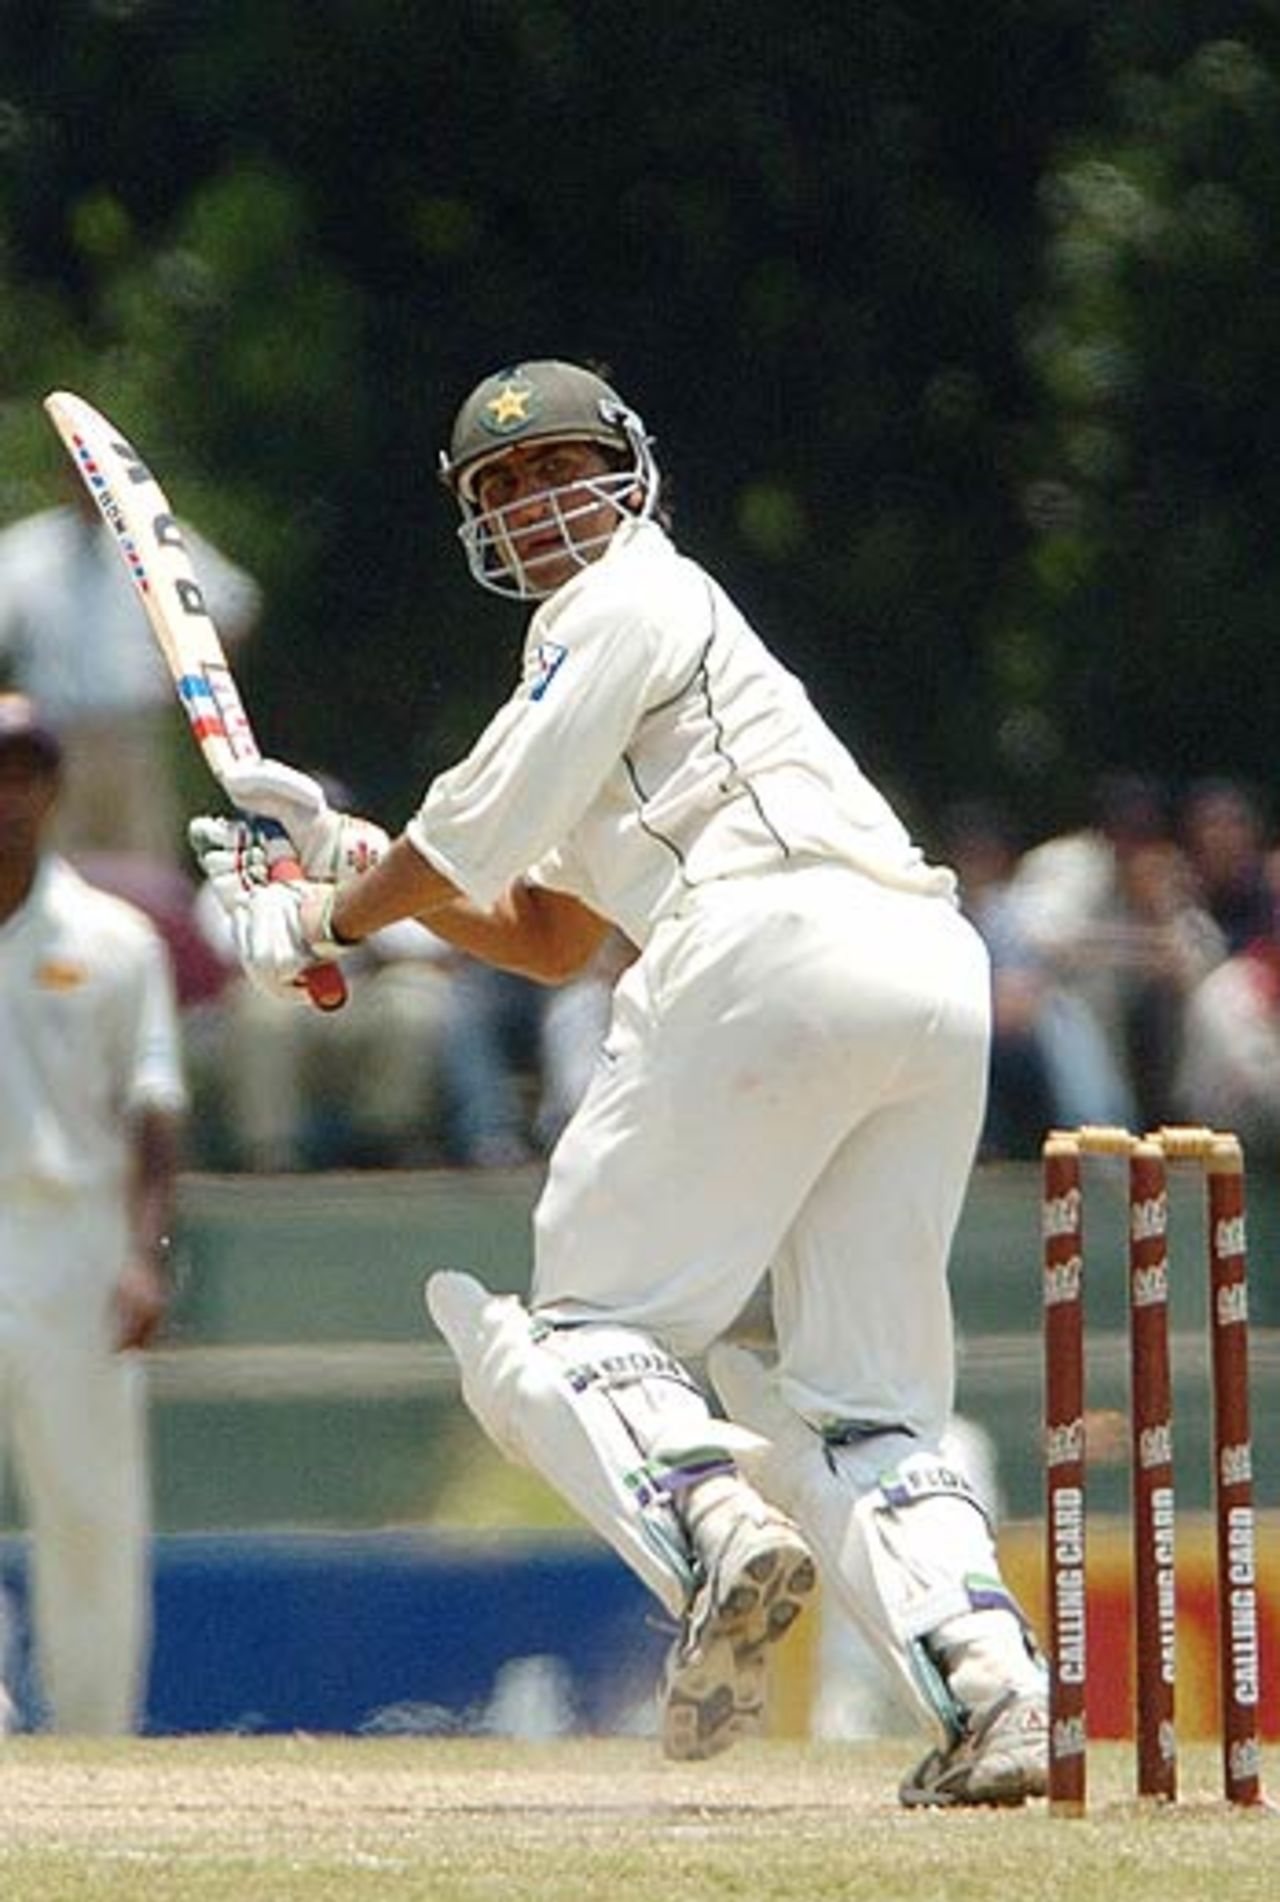 Younis Khan plays a leg glance during his fifty, Sri Lanka v Pakistan, 2nd Test, Kandy, 3rd day, April 5, 2006